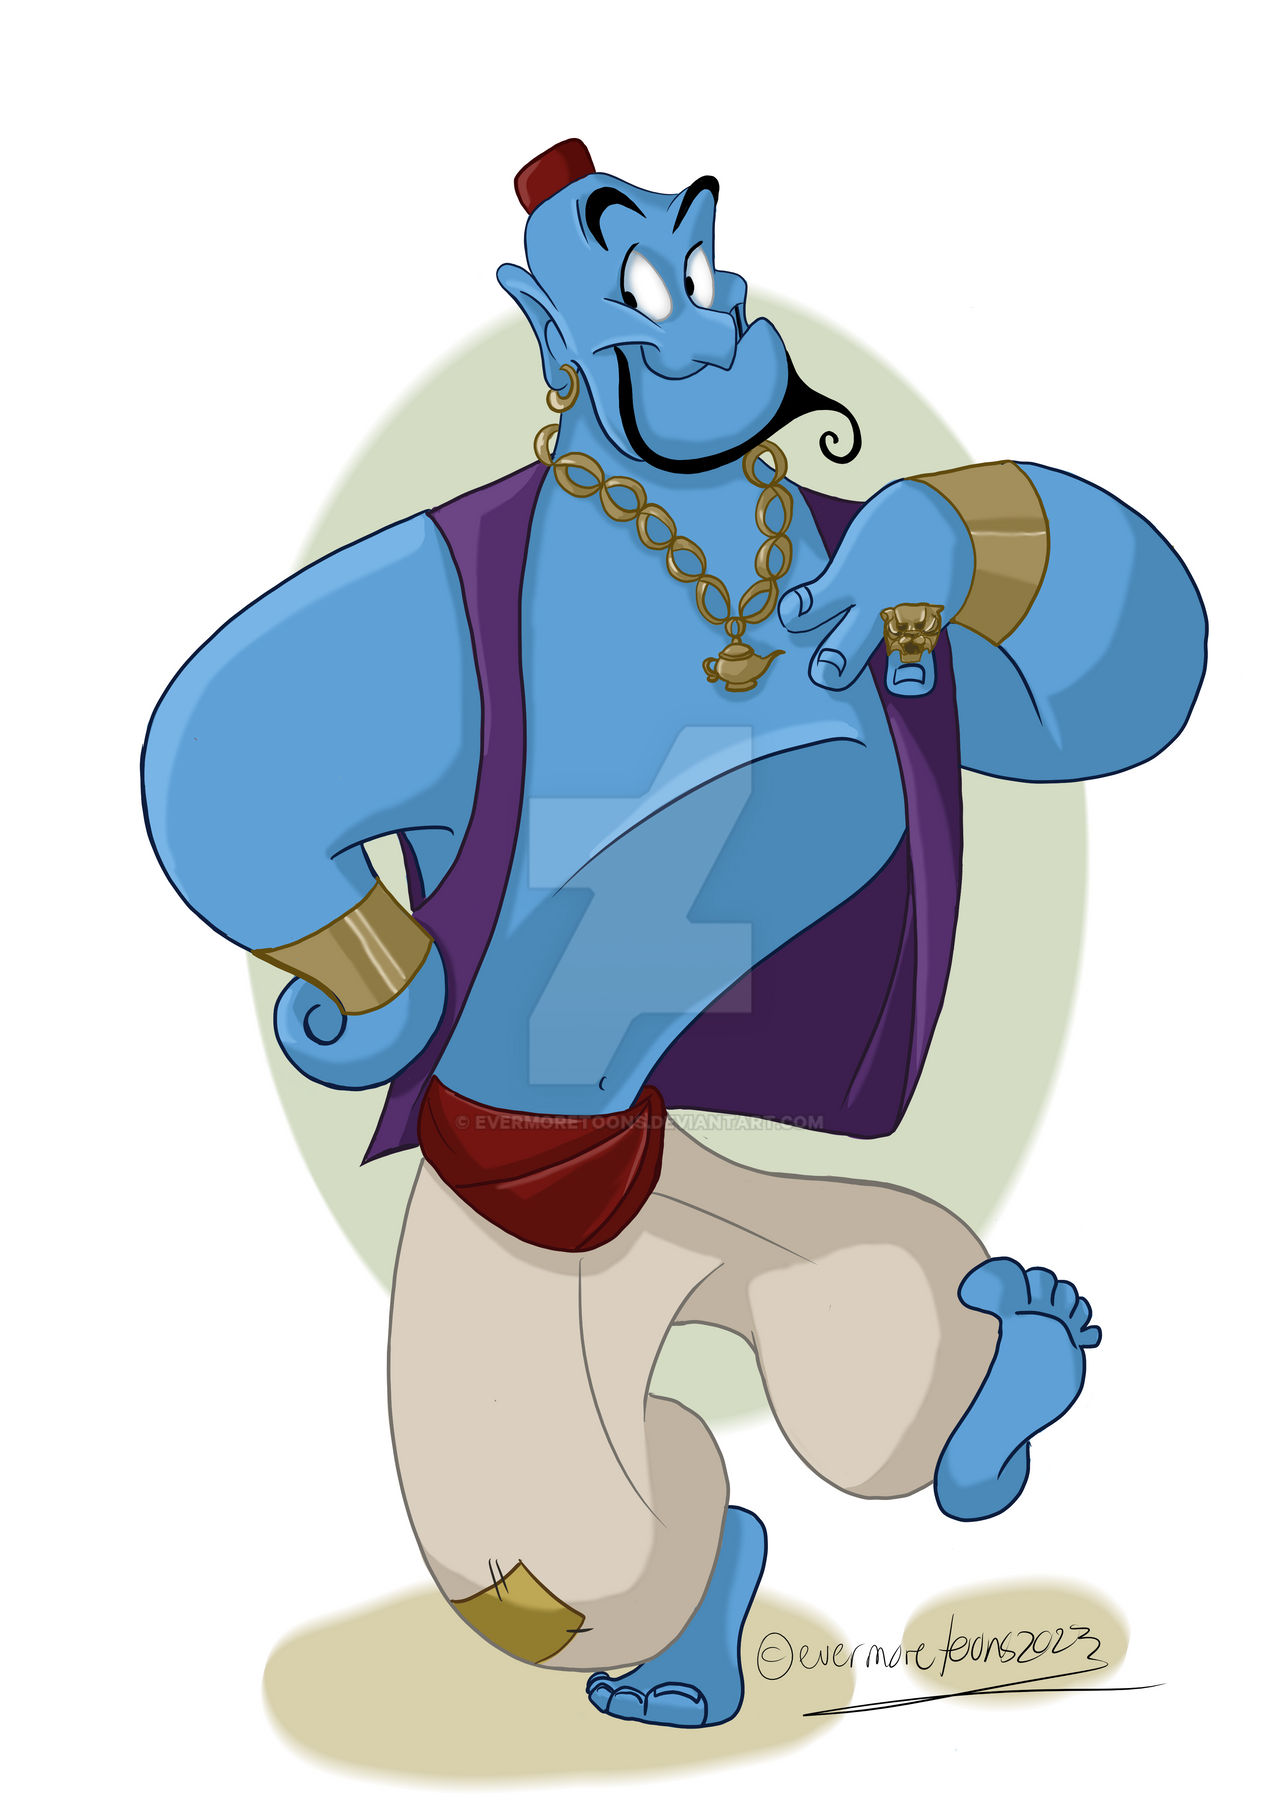 Genie Aladdin by evermoretoons on DeviantArt